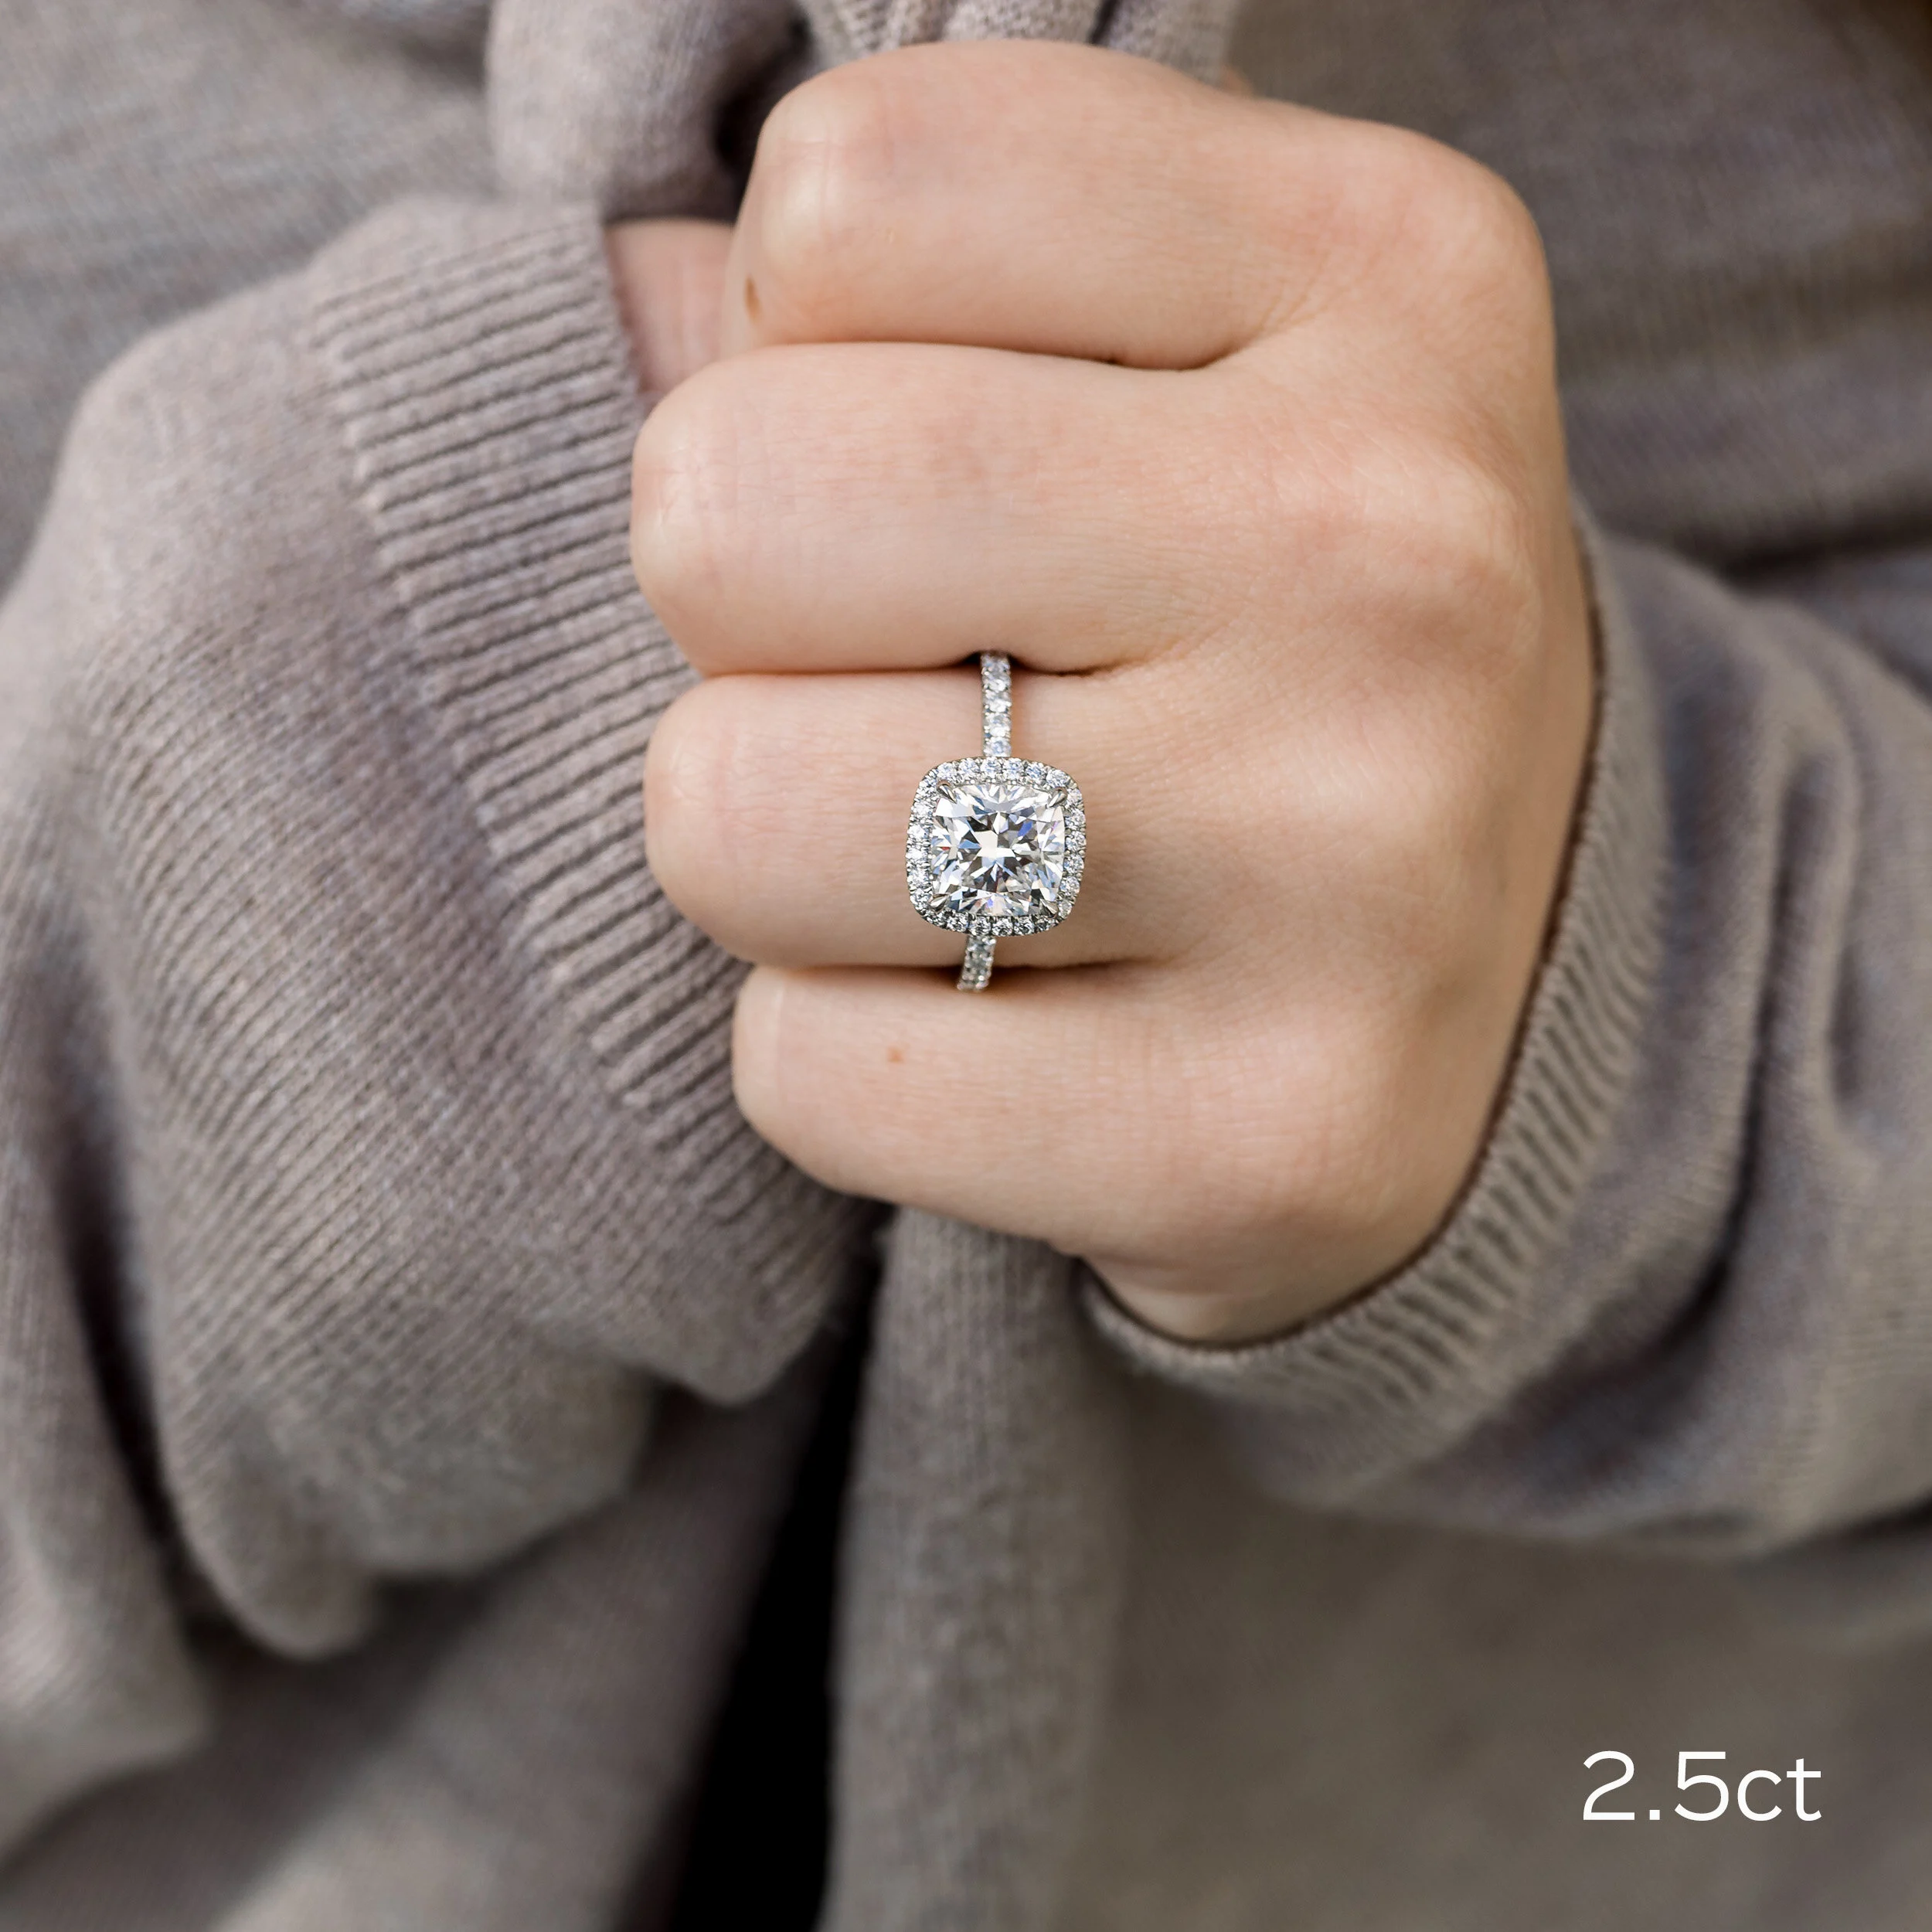 2.5 Carat Cushion Cut Lab Created Diamond in Platinum Halo Engagement Ring Setting Ada Diamonds Design AD-364 on model